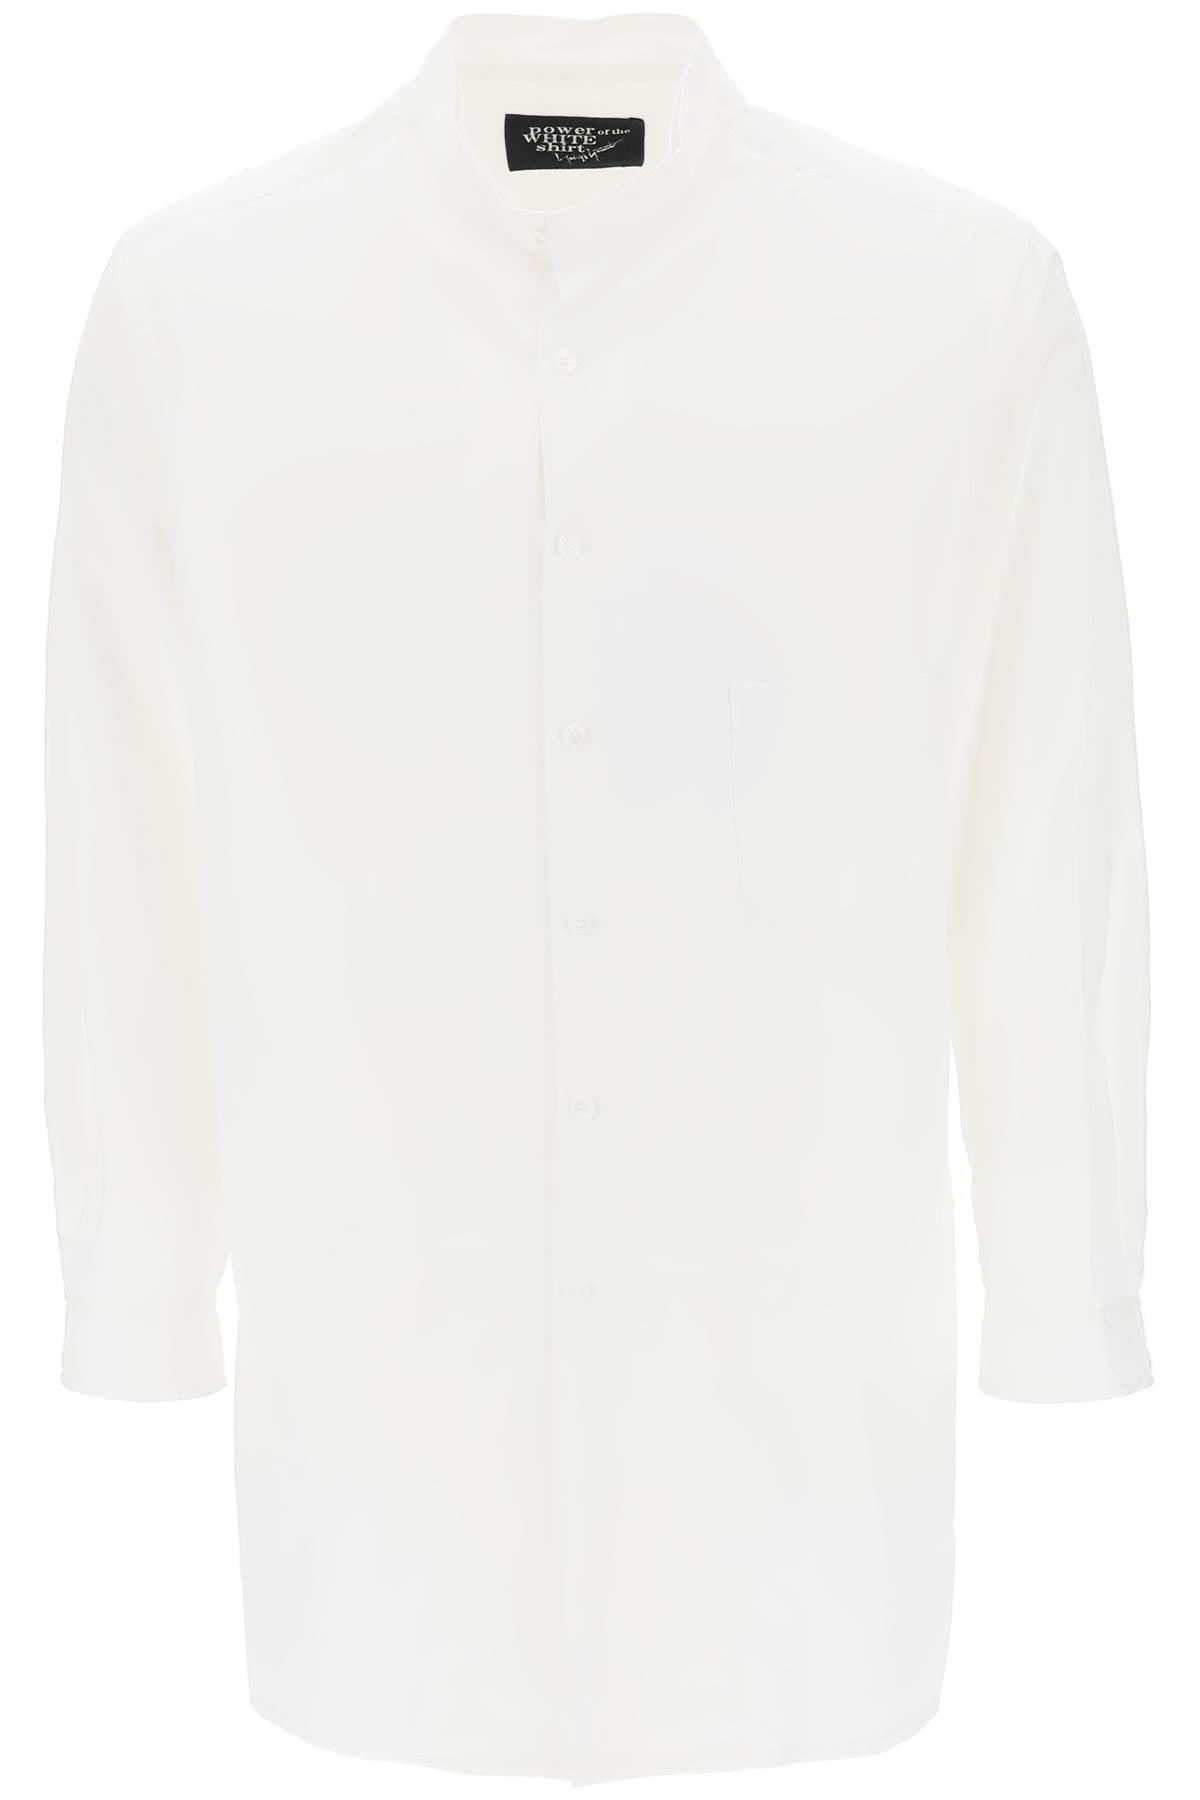 Yohji Yamamoto layered-design cotton T-shirt - White